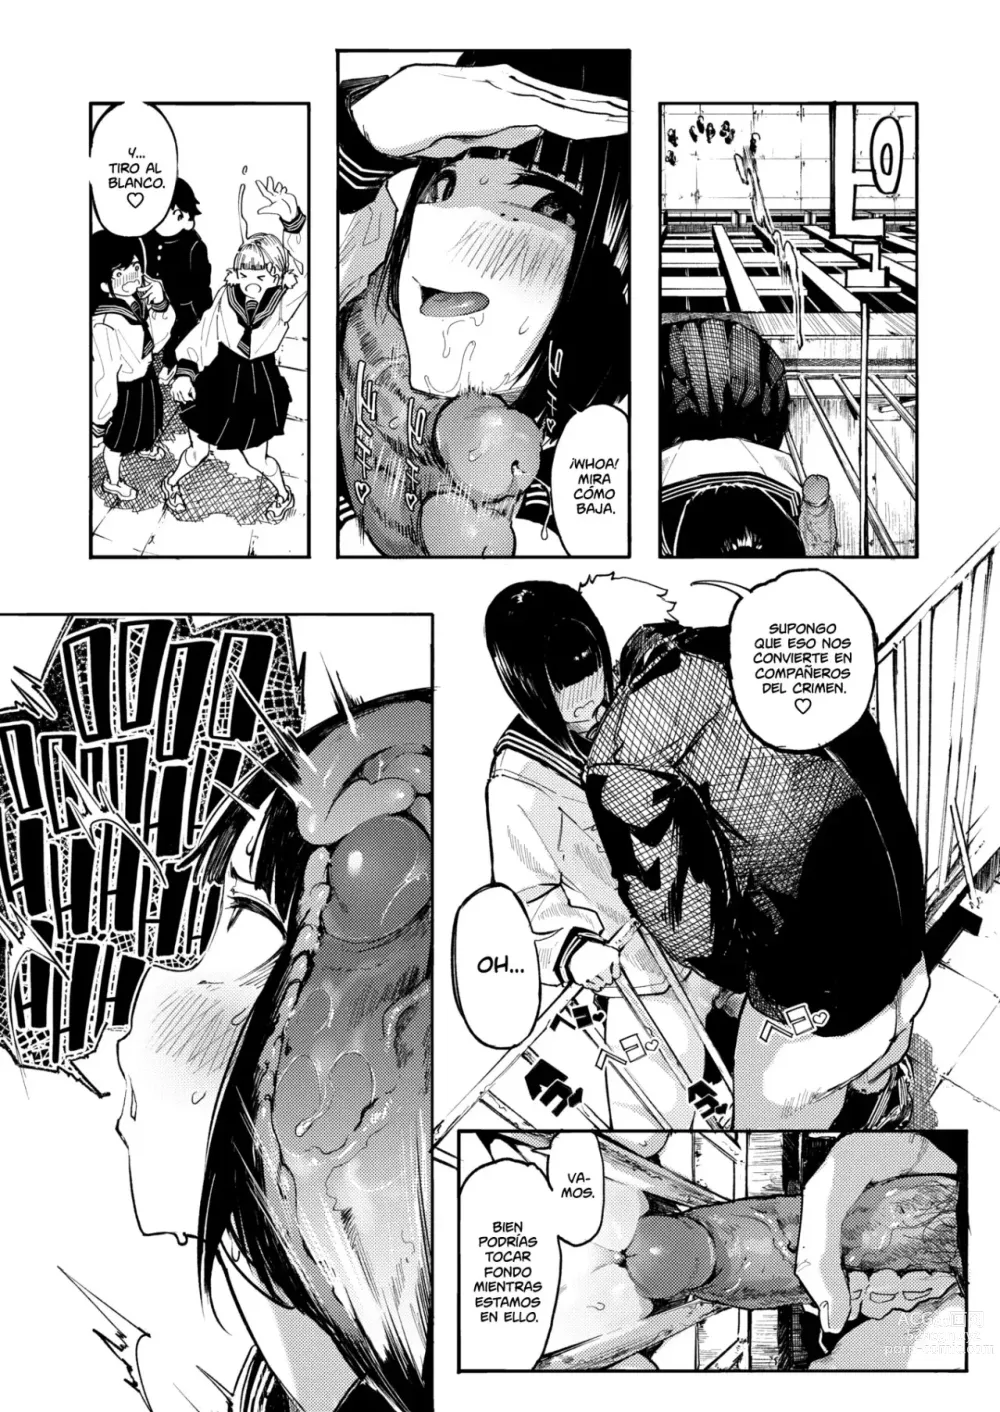 Page 16 of doujinshi Chica Suicida